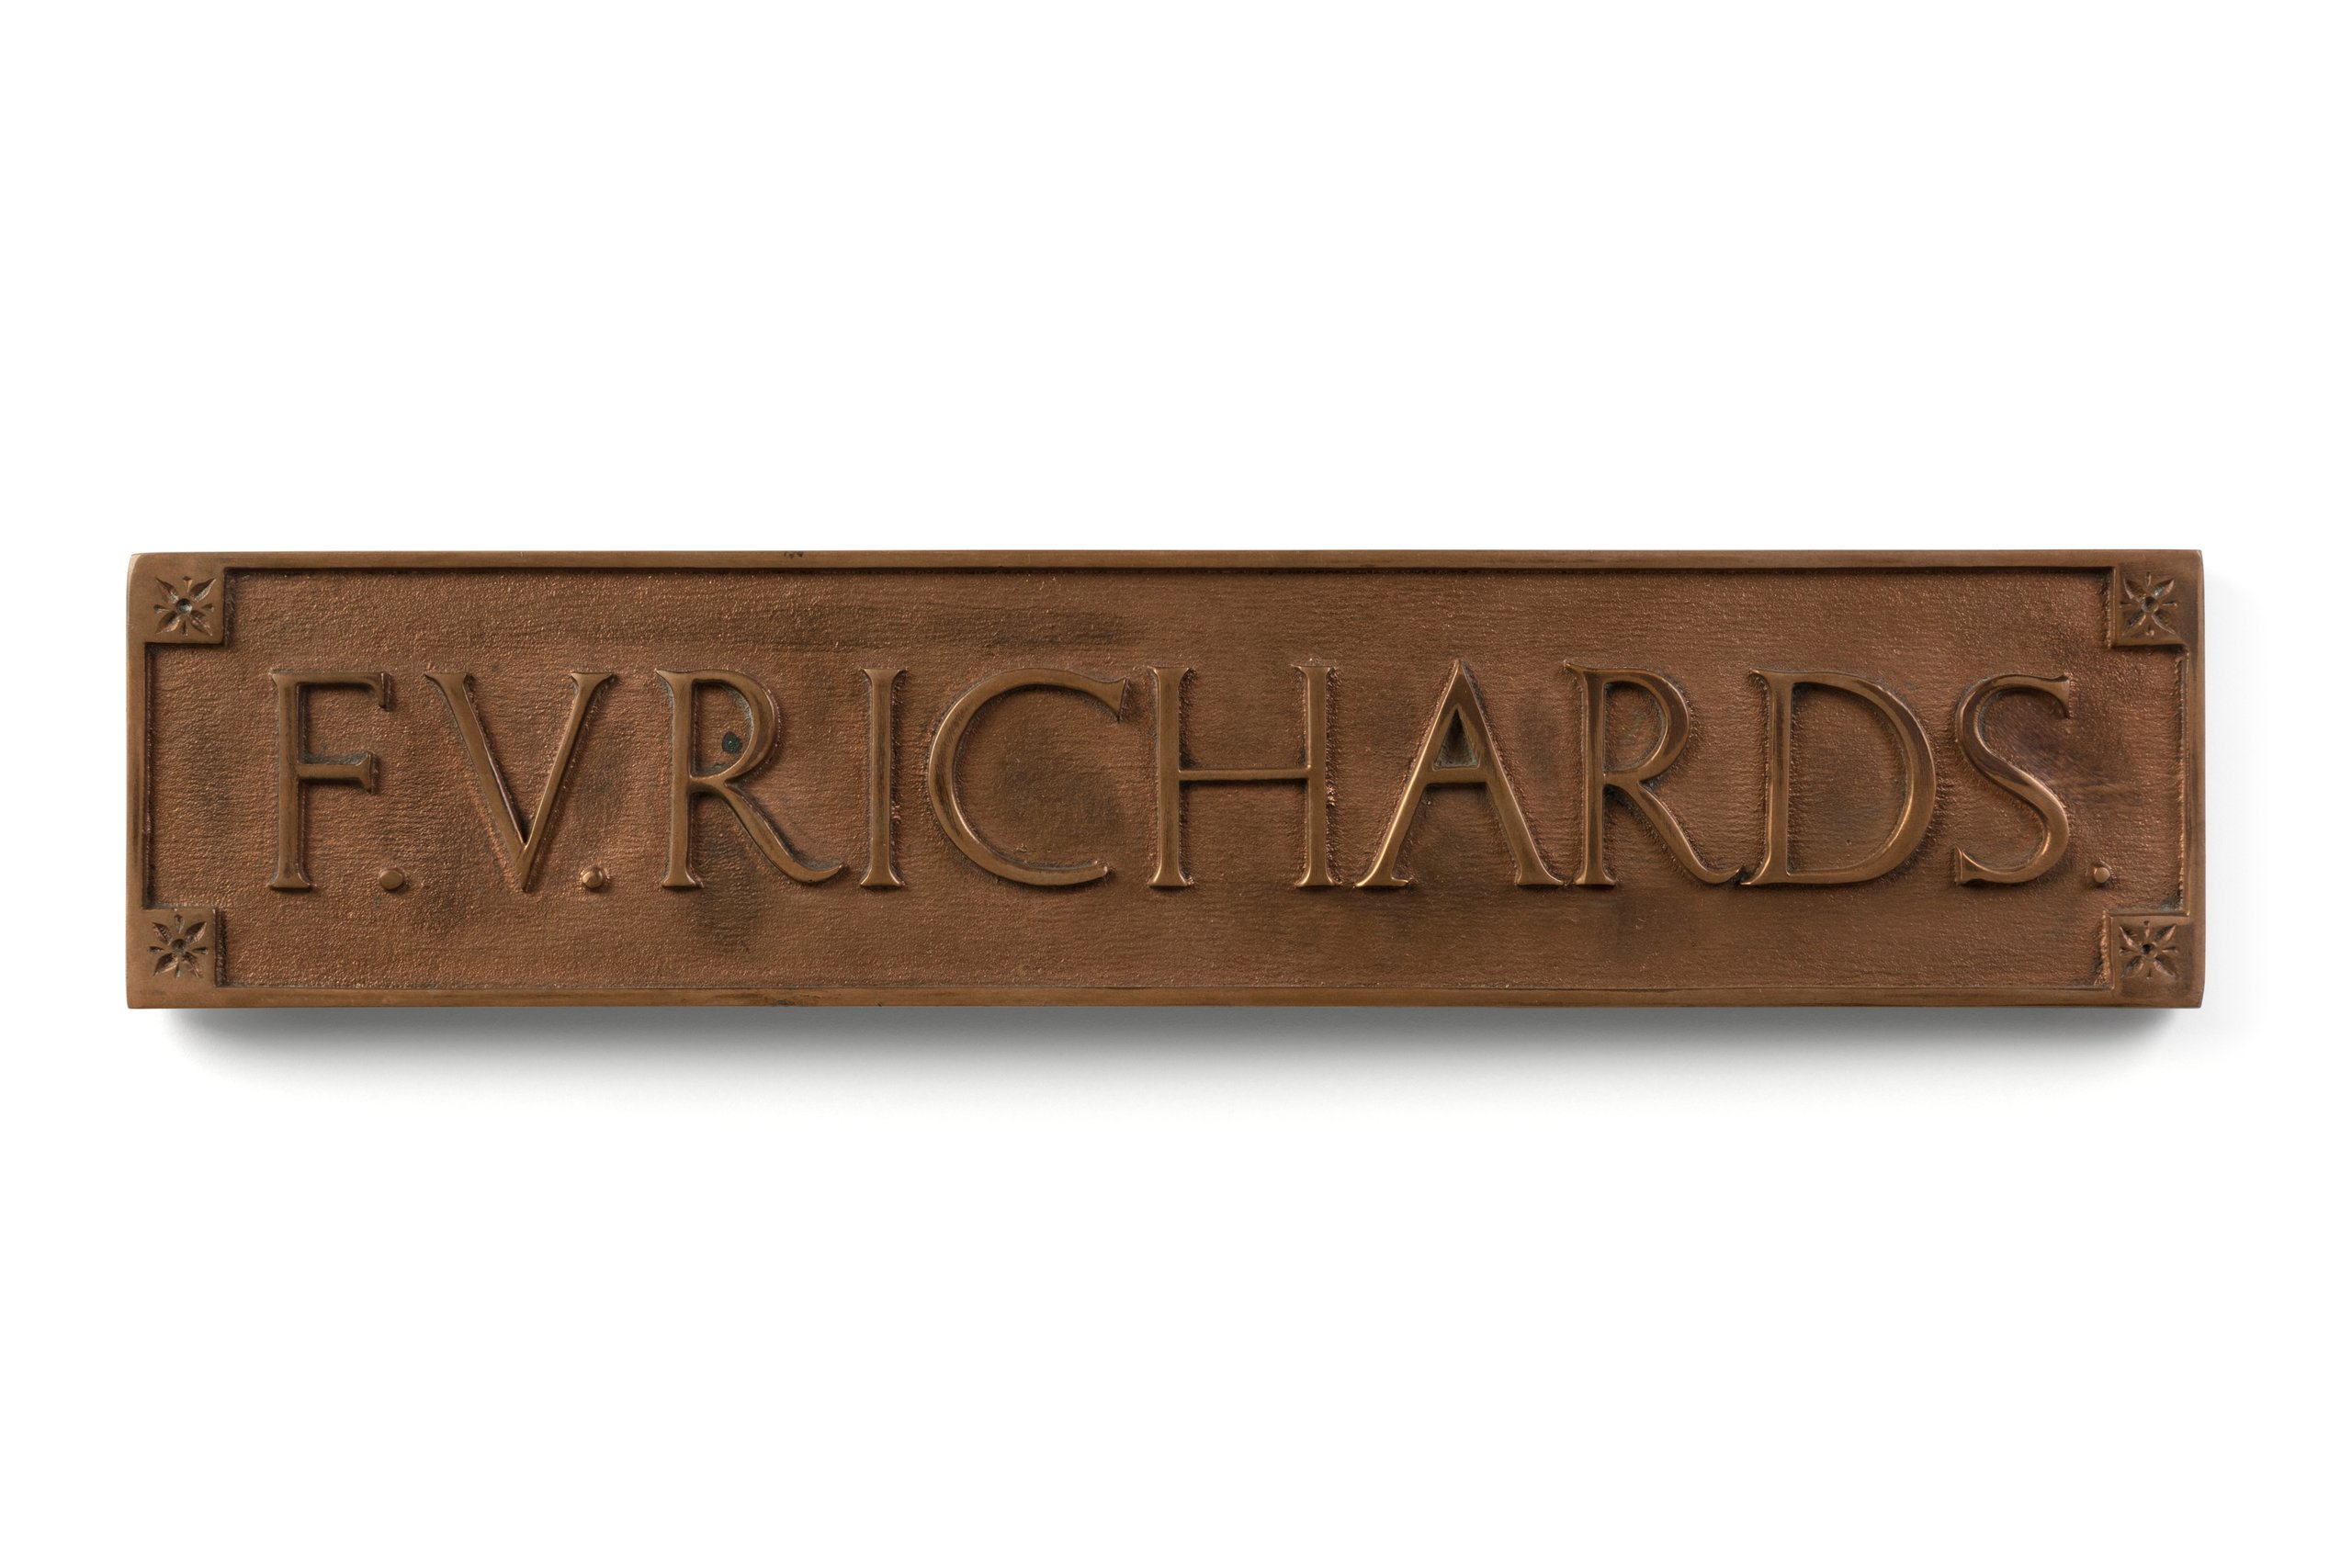 Nameplate for Richards clothing shop